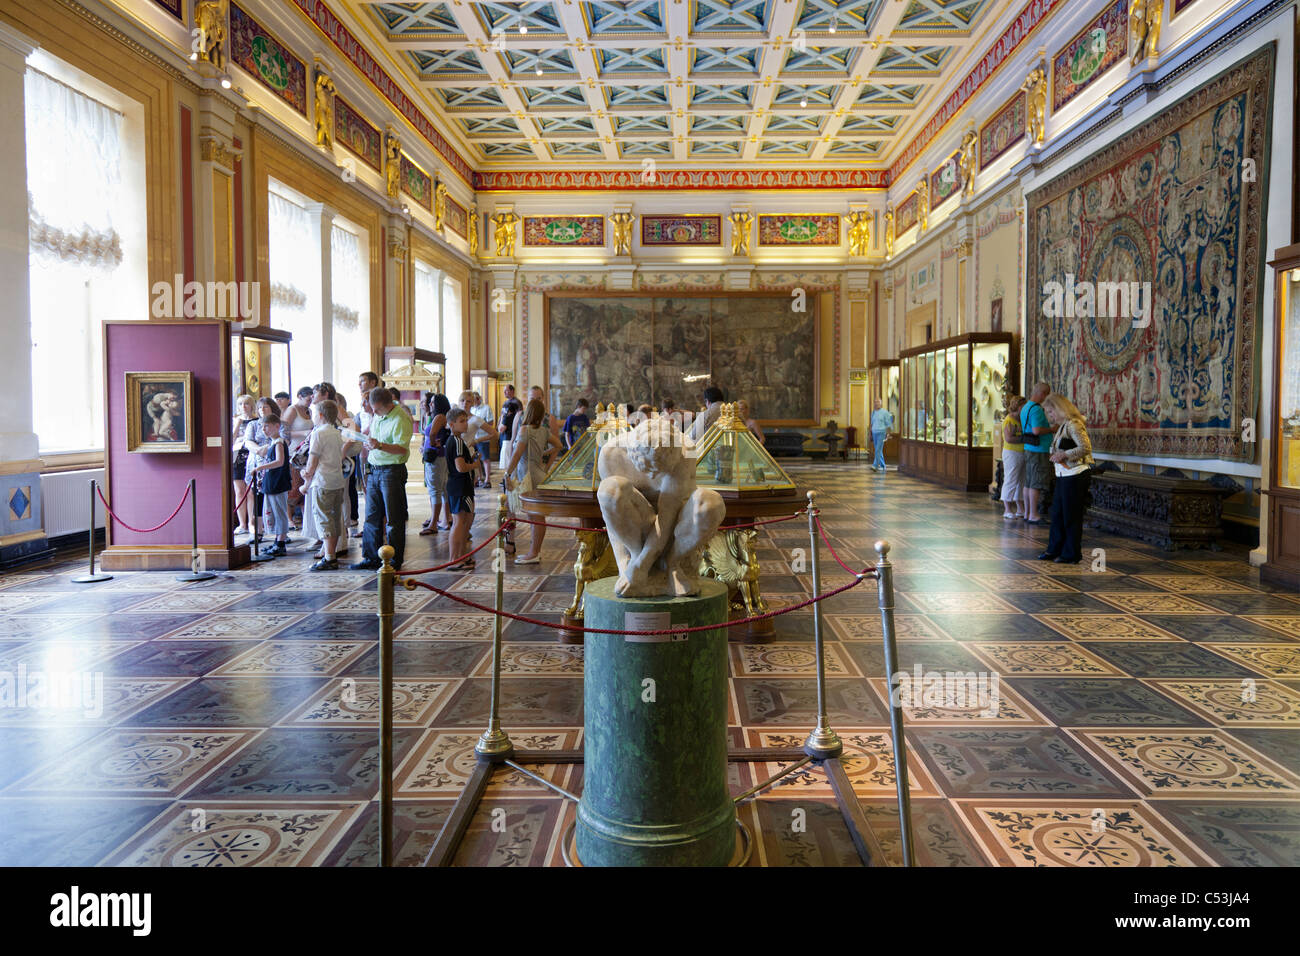 Hermitage Museum, Saint Petersburg, Russia - interior 3 Stock Photo